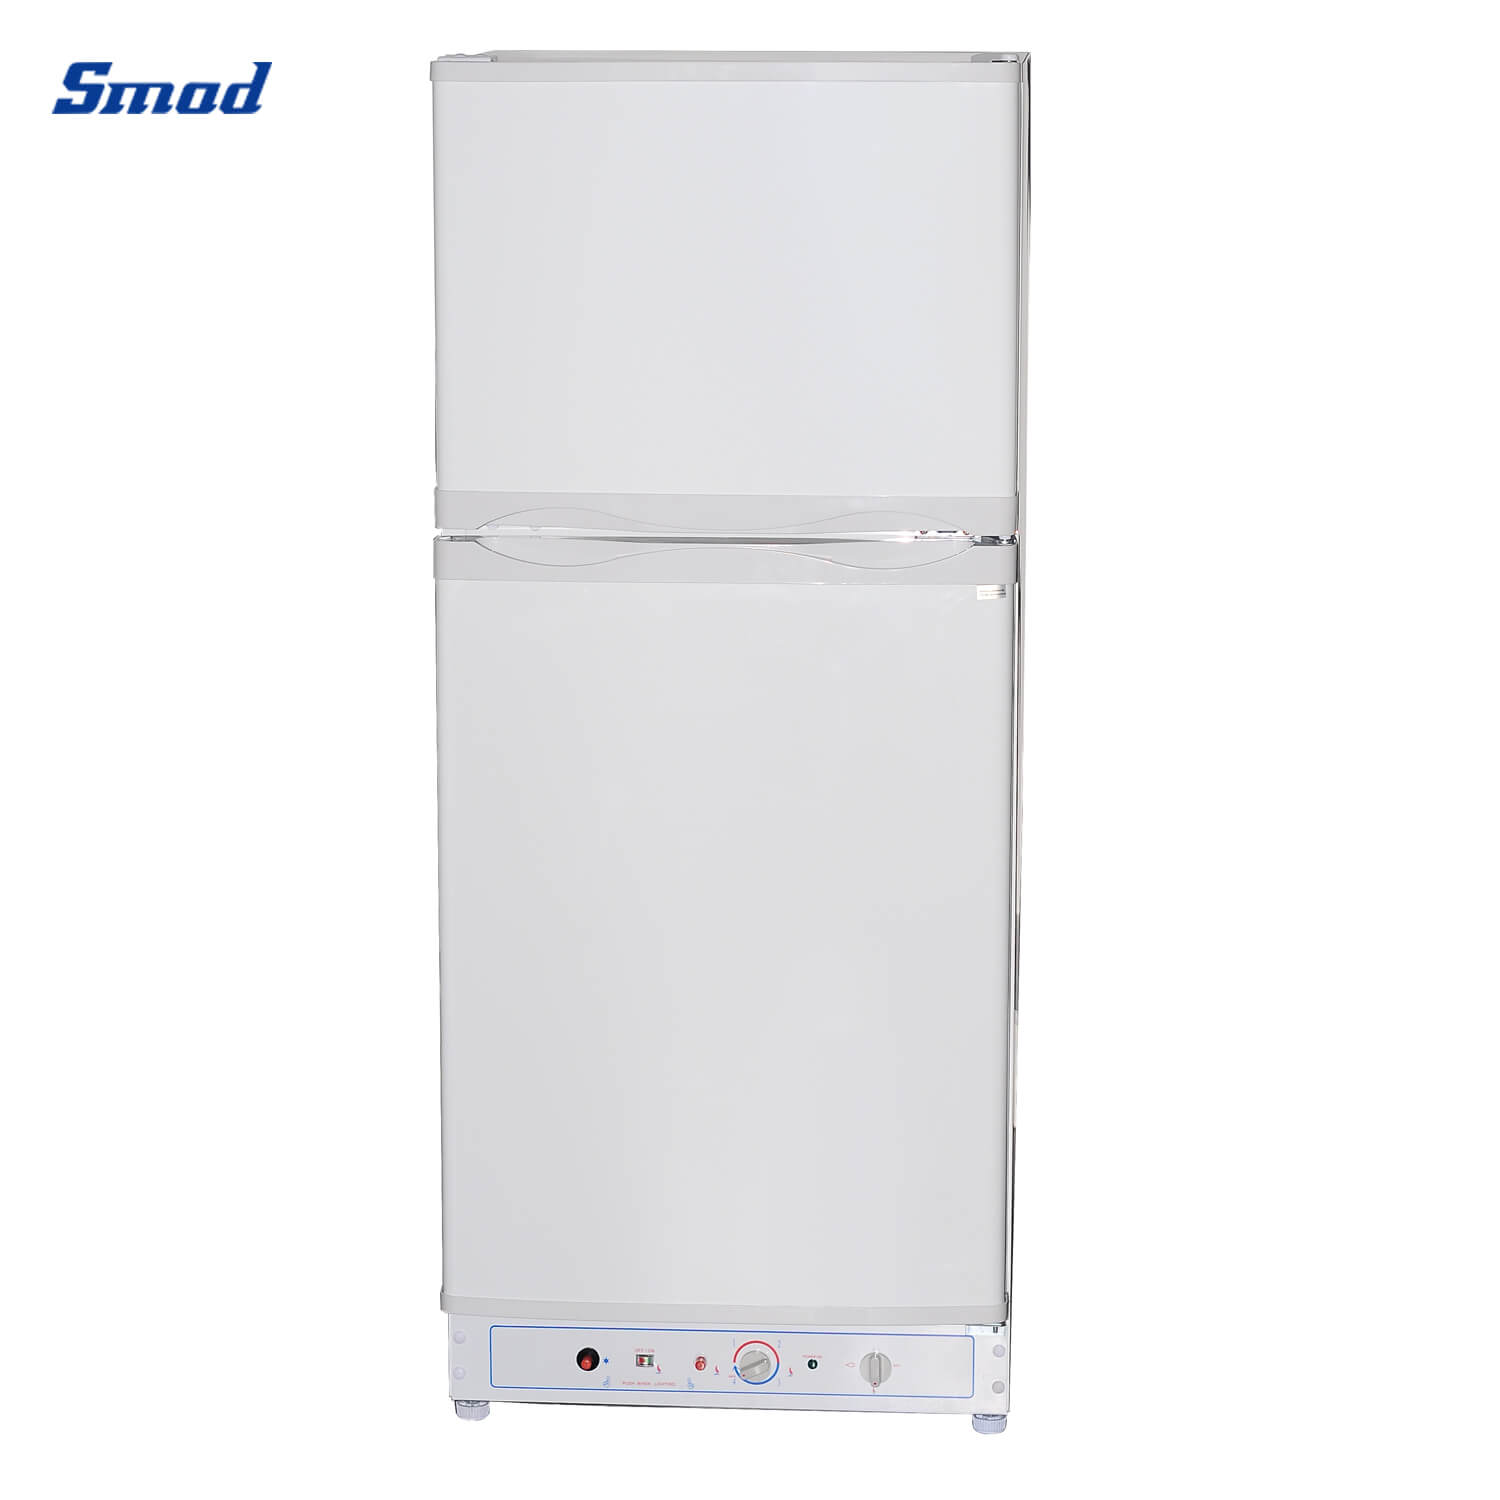 
Smad 275L Gas / Propane Top Freezer Absorption Fridge Freezer for off-grid houses